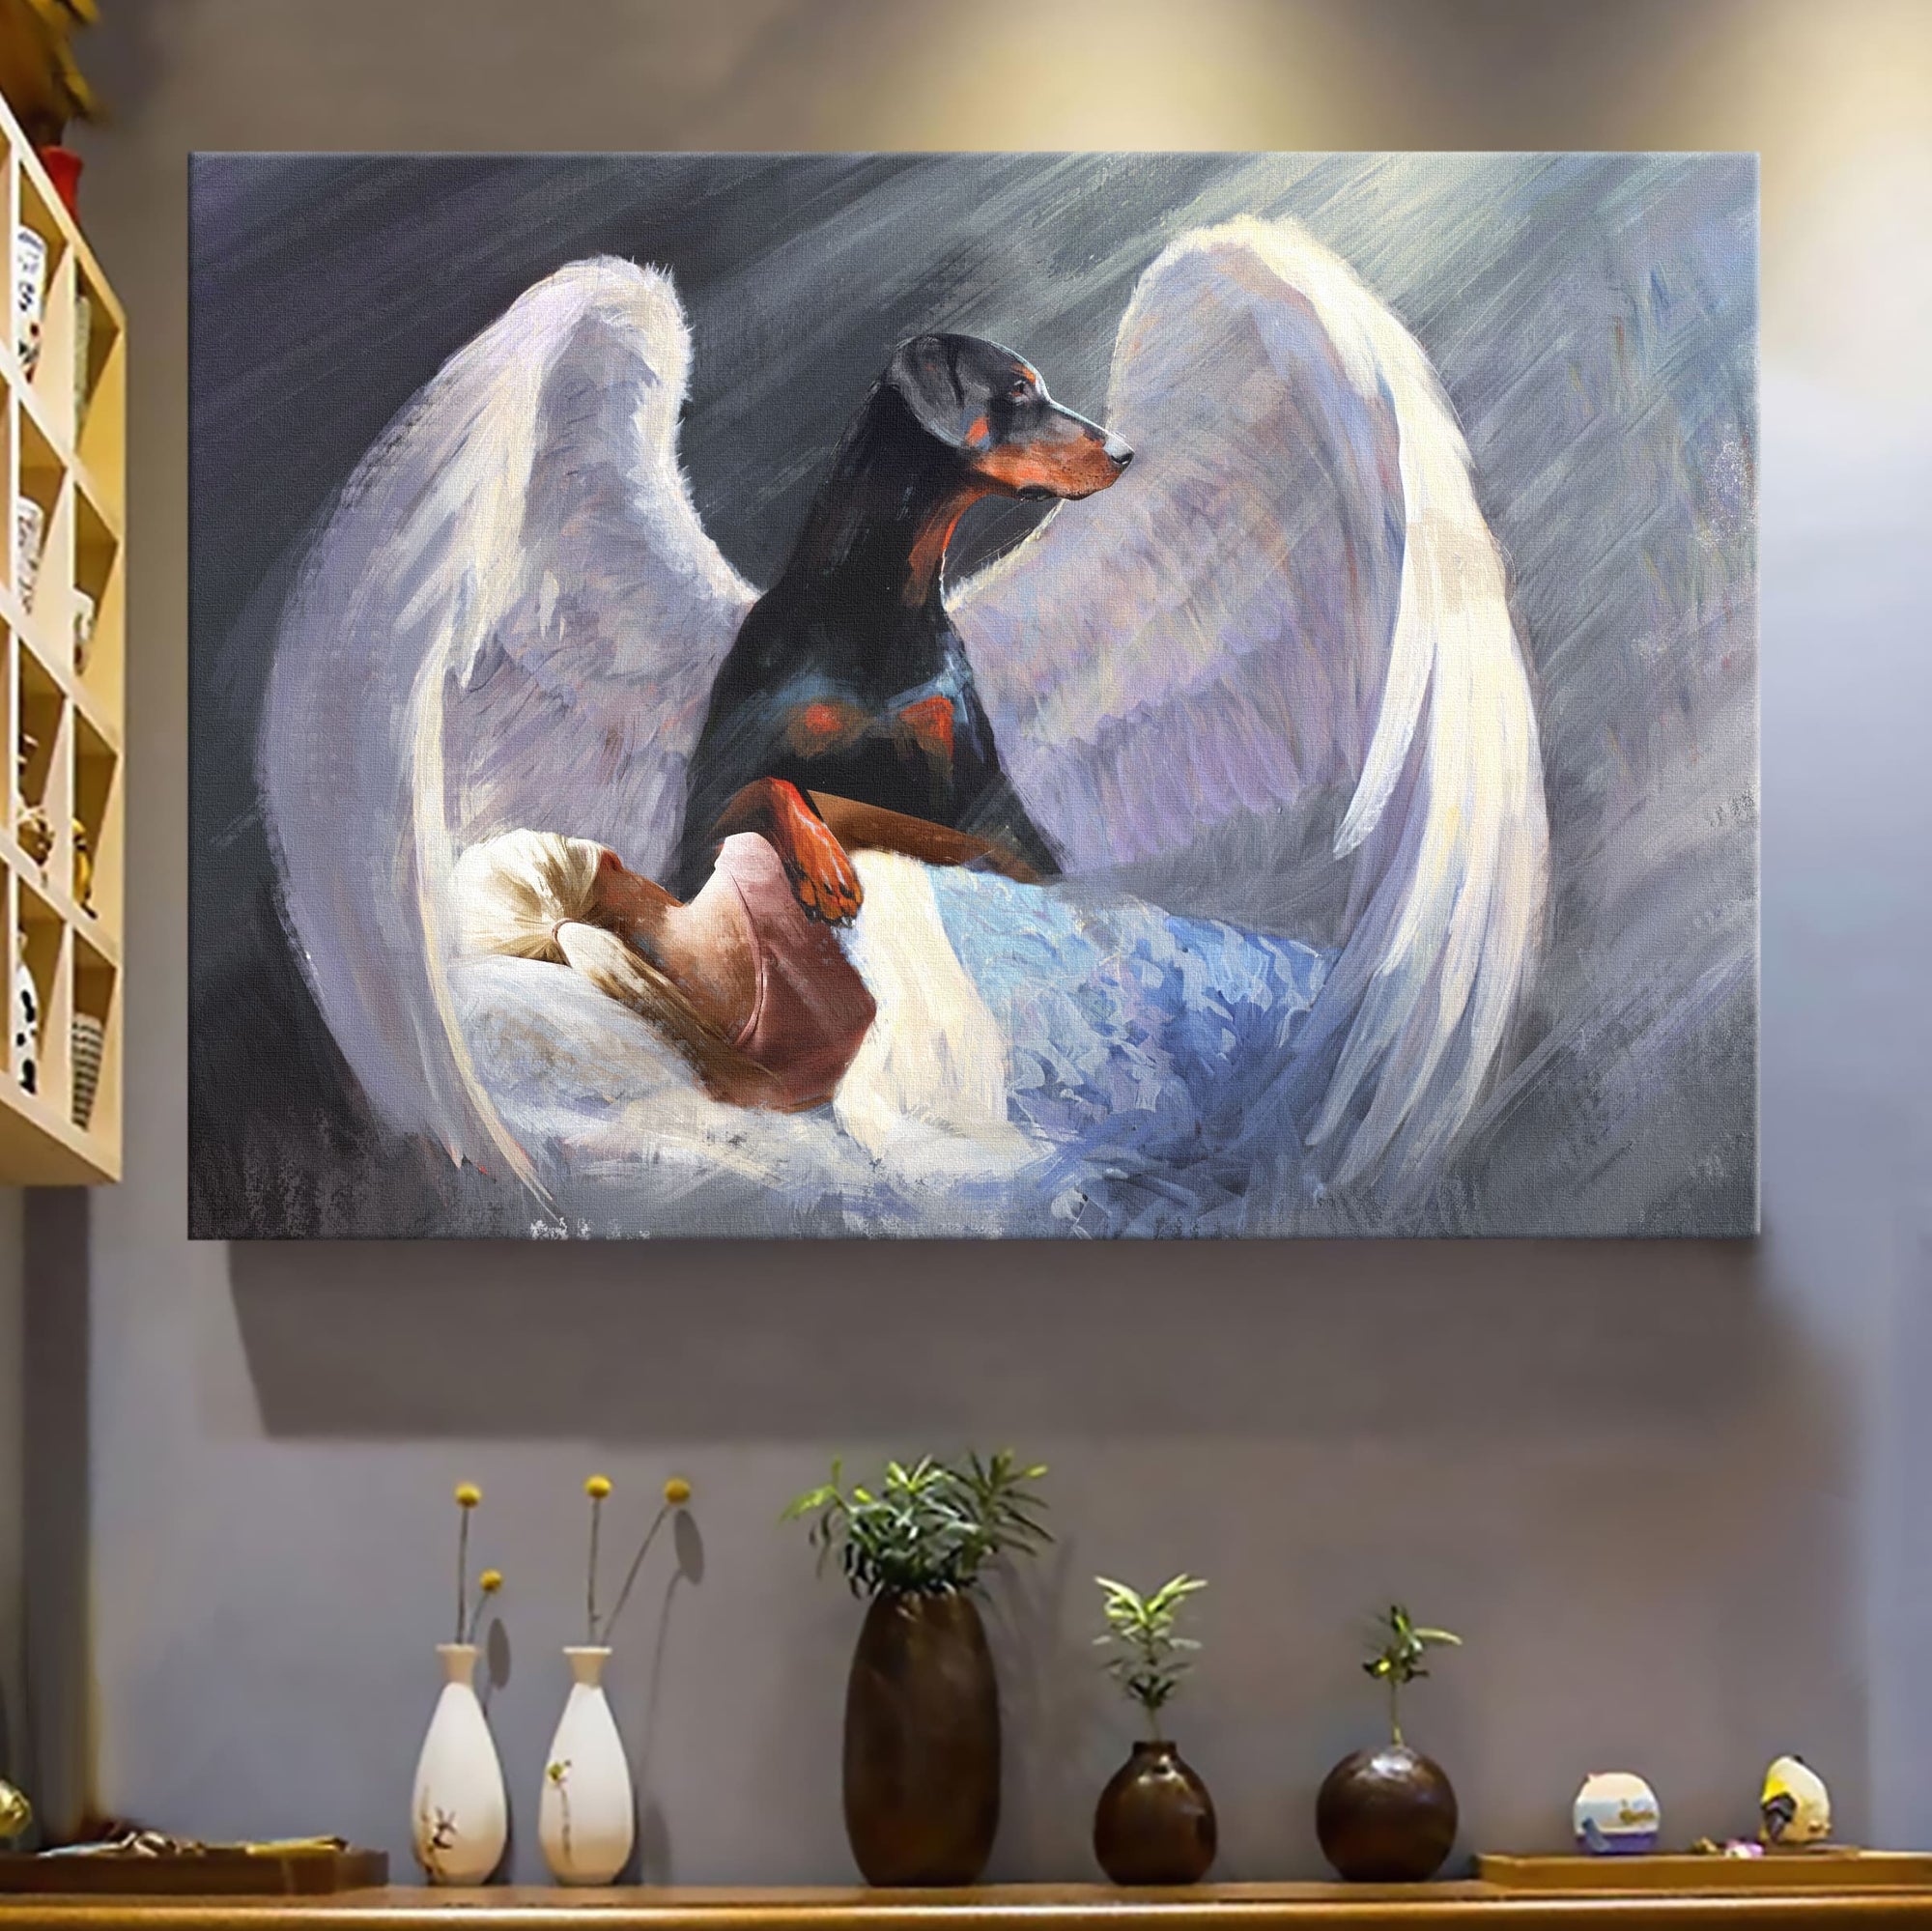 Sleeping girl, Doberman, Beautiful Wings, I'll protect you - Doberman Landscape Canvas Prints, Wall Art